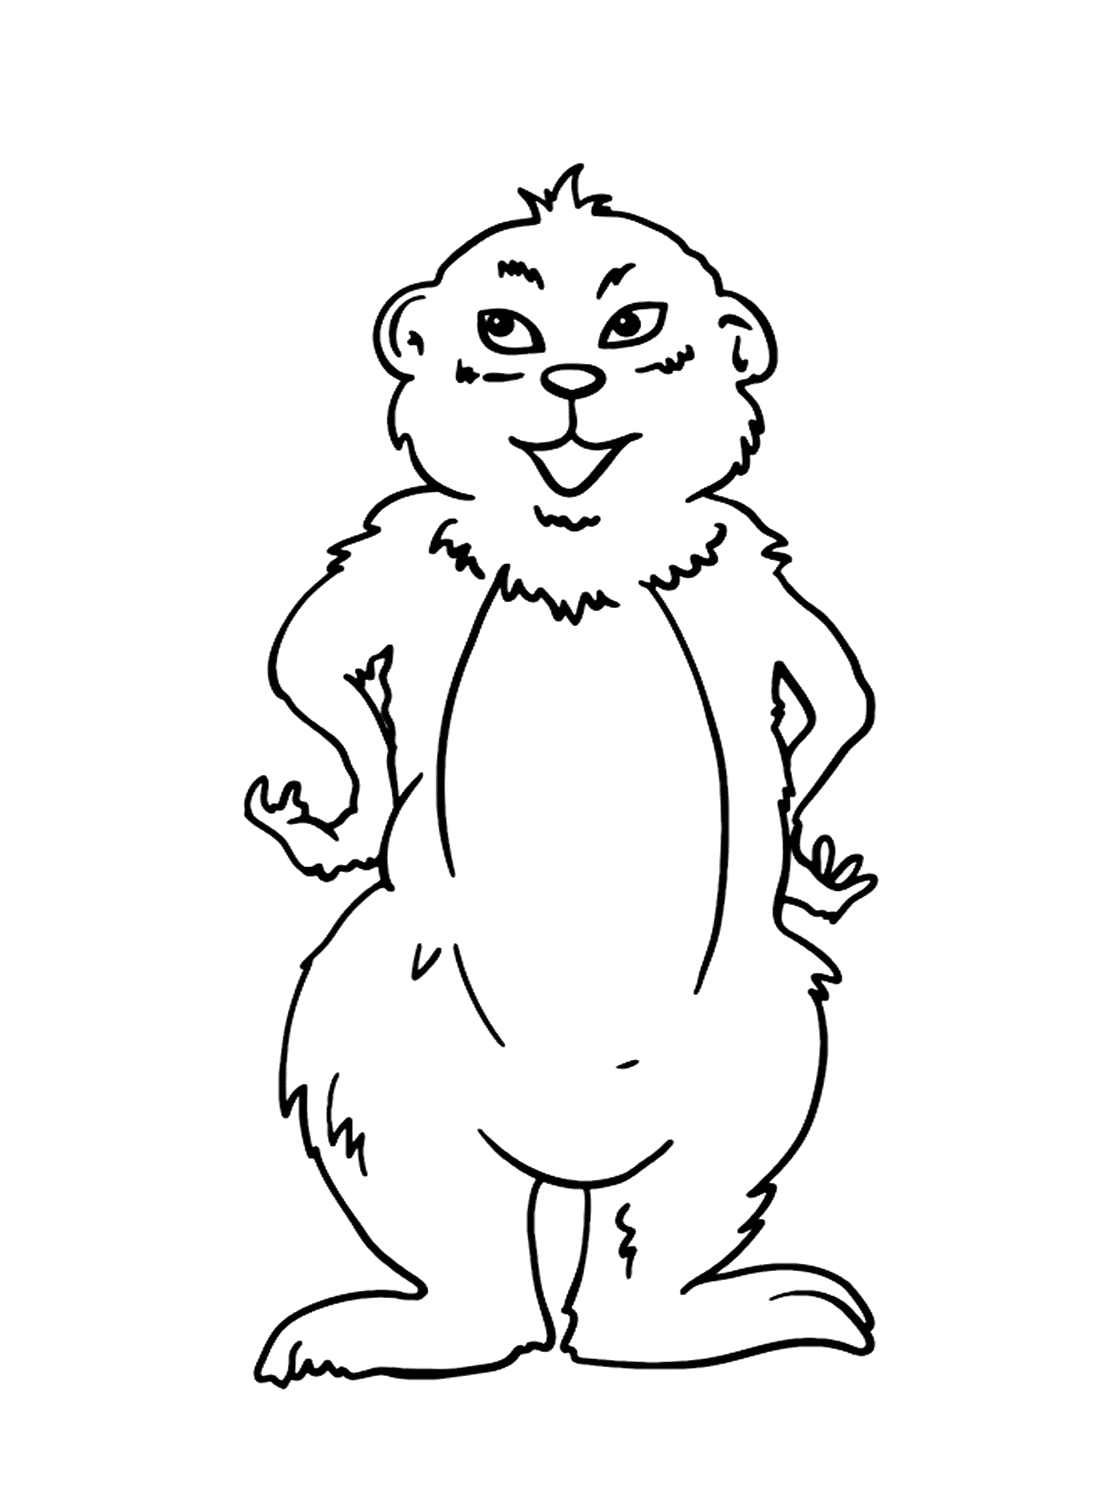 Cartoon-Murmeltier von Marmot